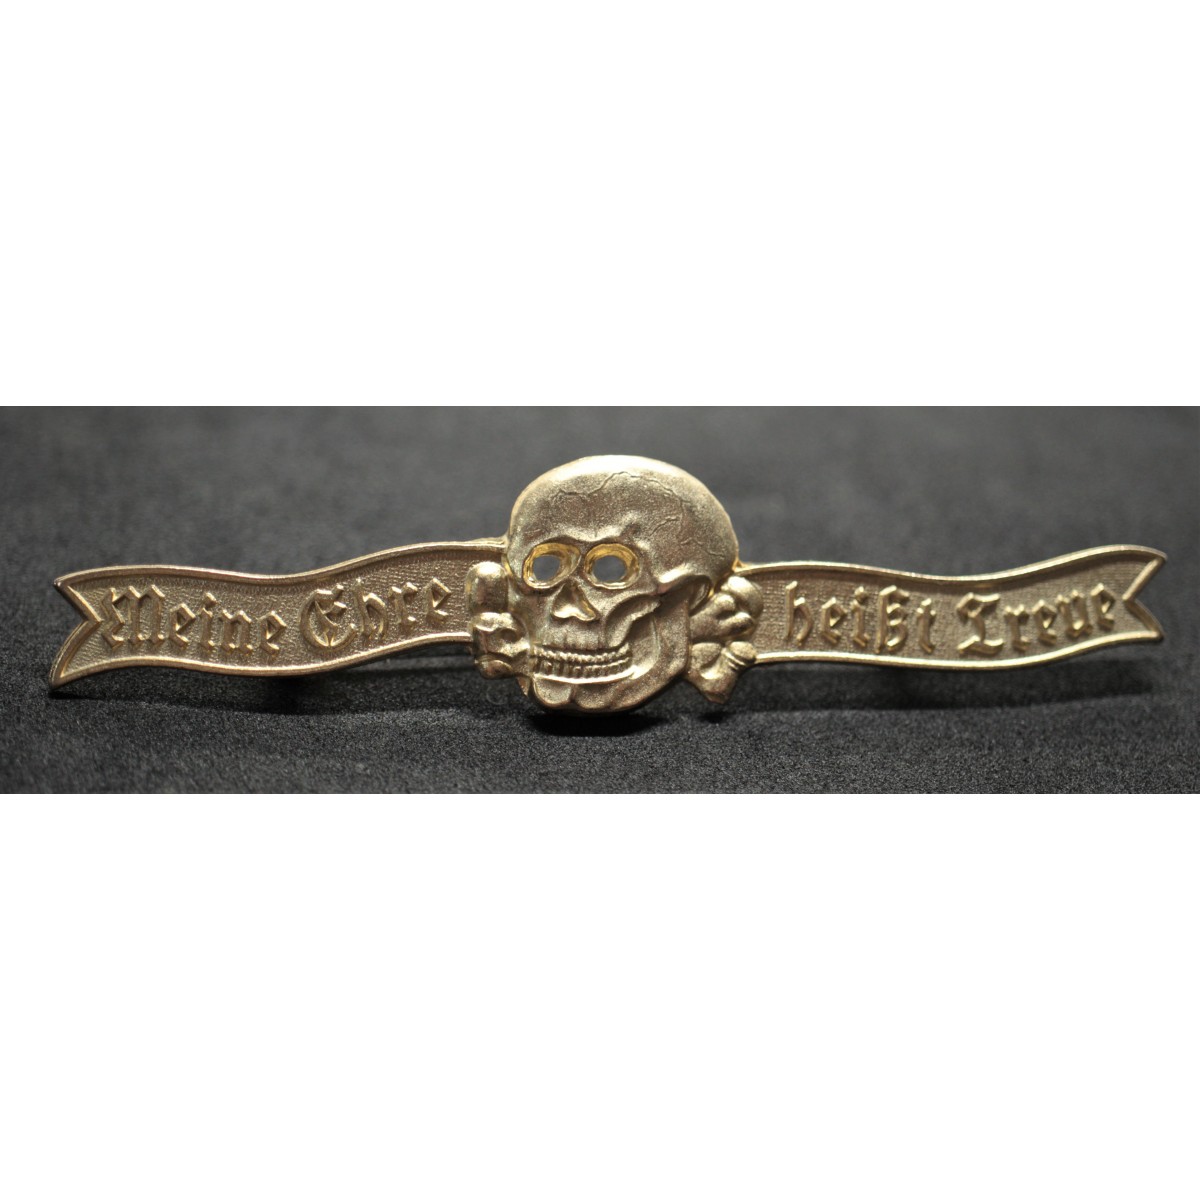 German Army WW2 Eagle Badge Pin "Meine Ehre Heisst Treue" 